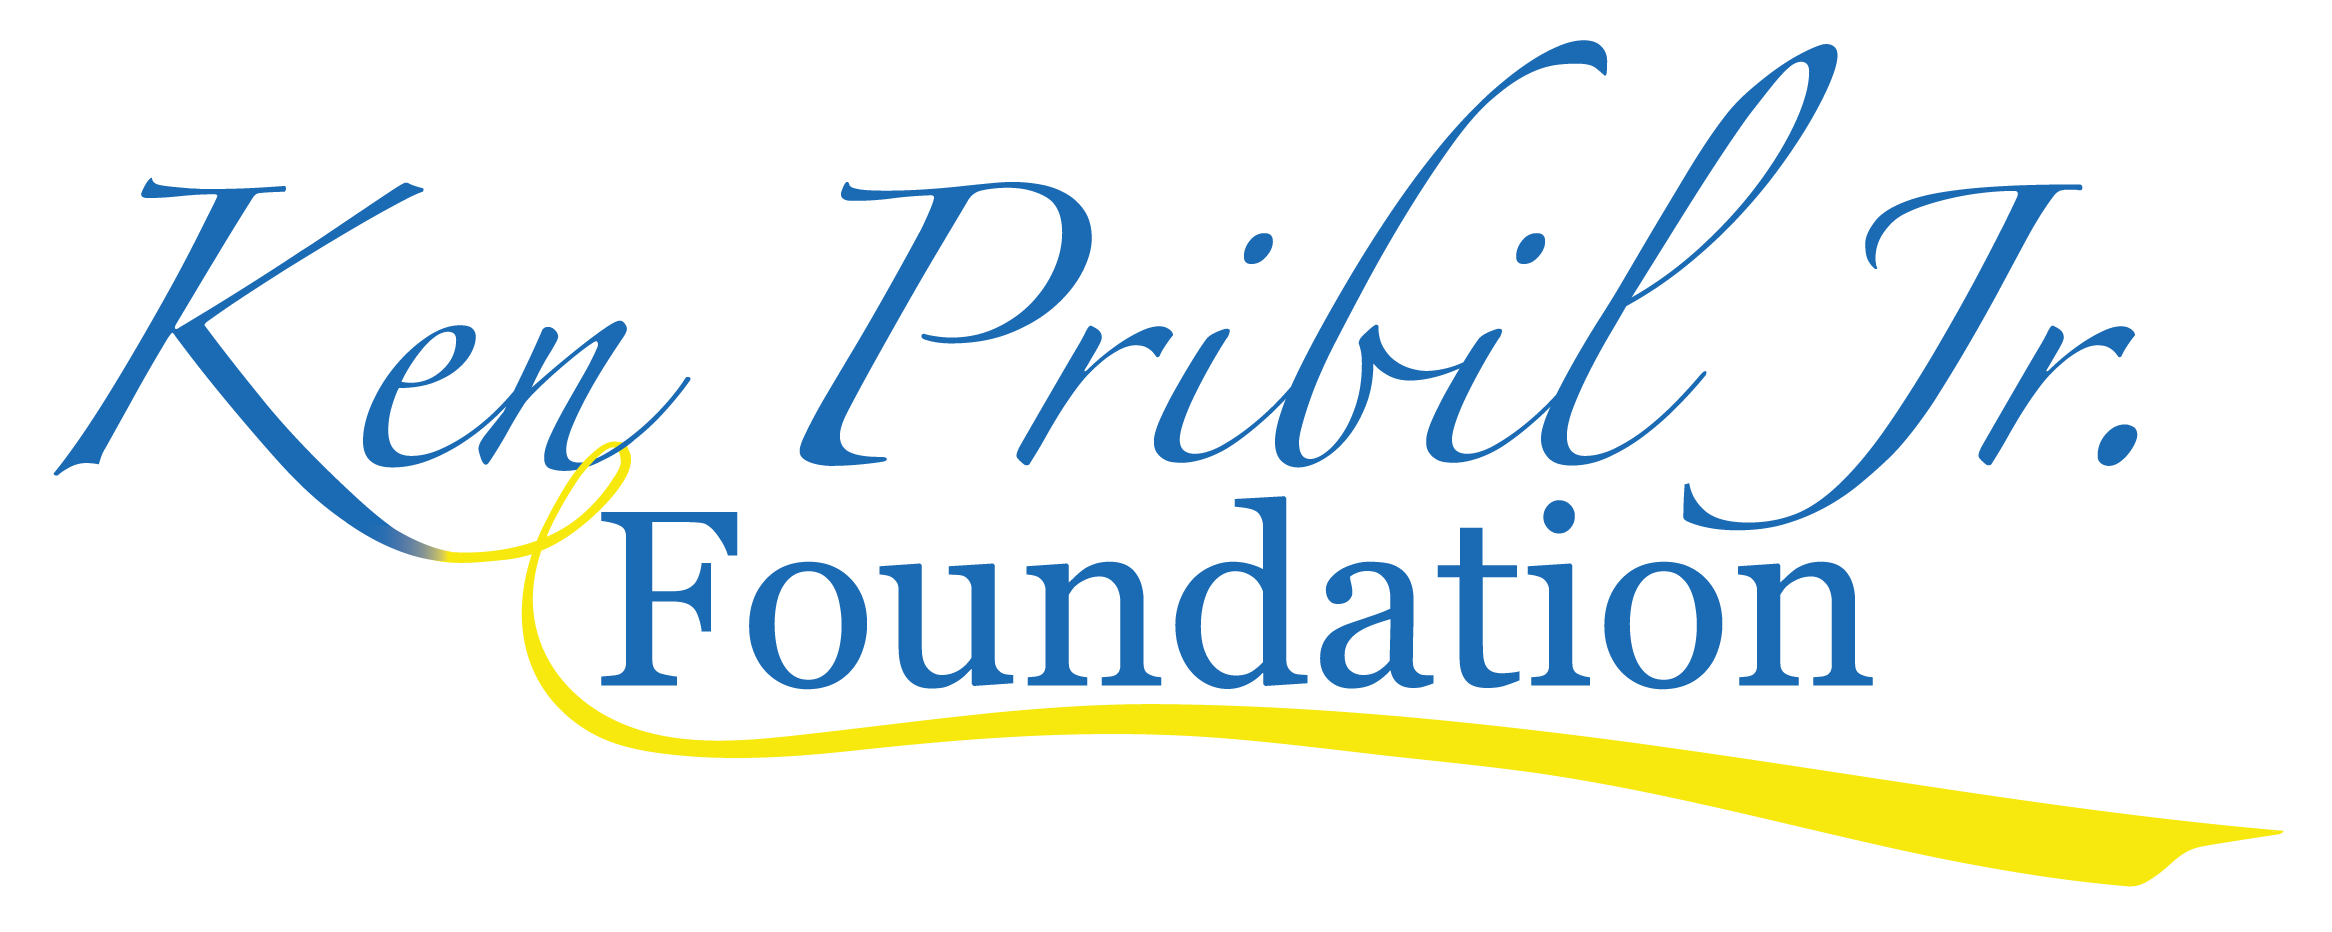 Ken Pribil Jr. Foundation is a 501c3 tax-exempt nonprofit organization from Rockville Centre, New York.